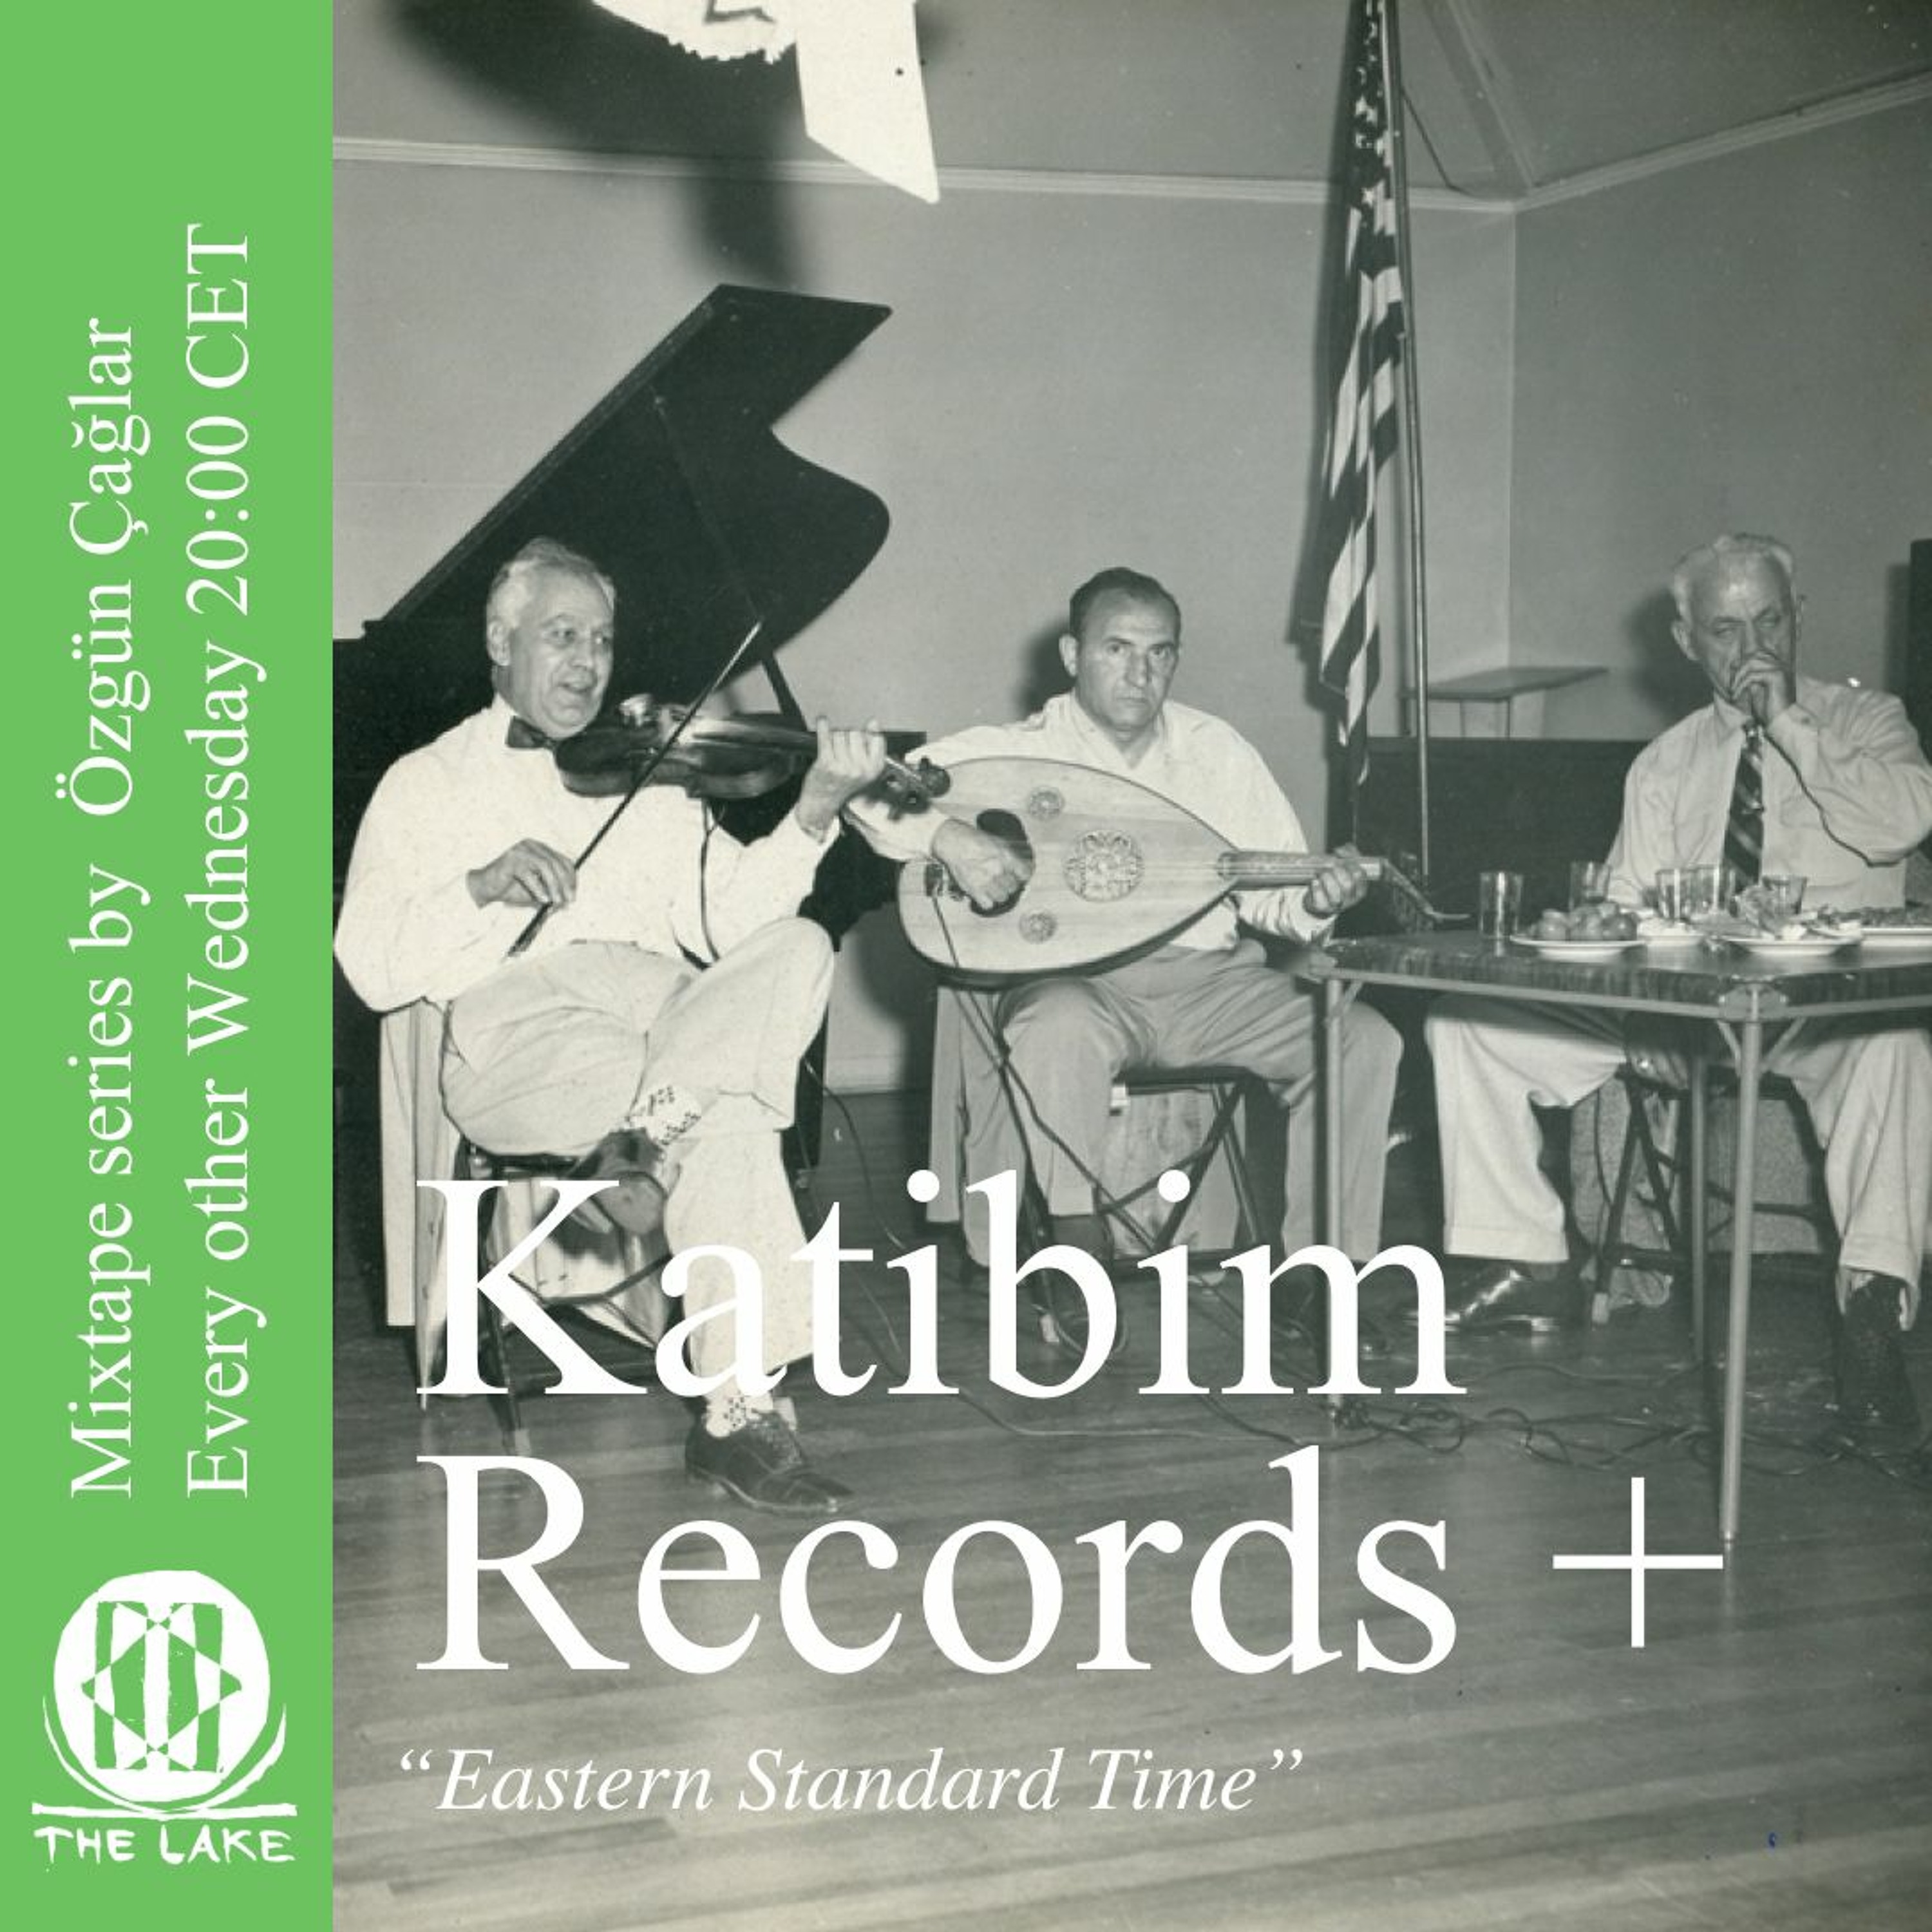 Katibim Records + 02 ”Eastern Standard Time”